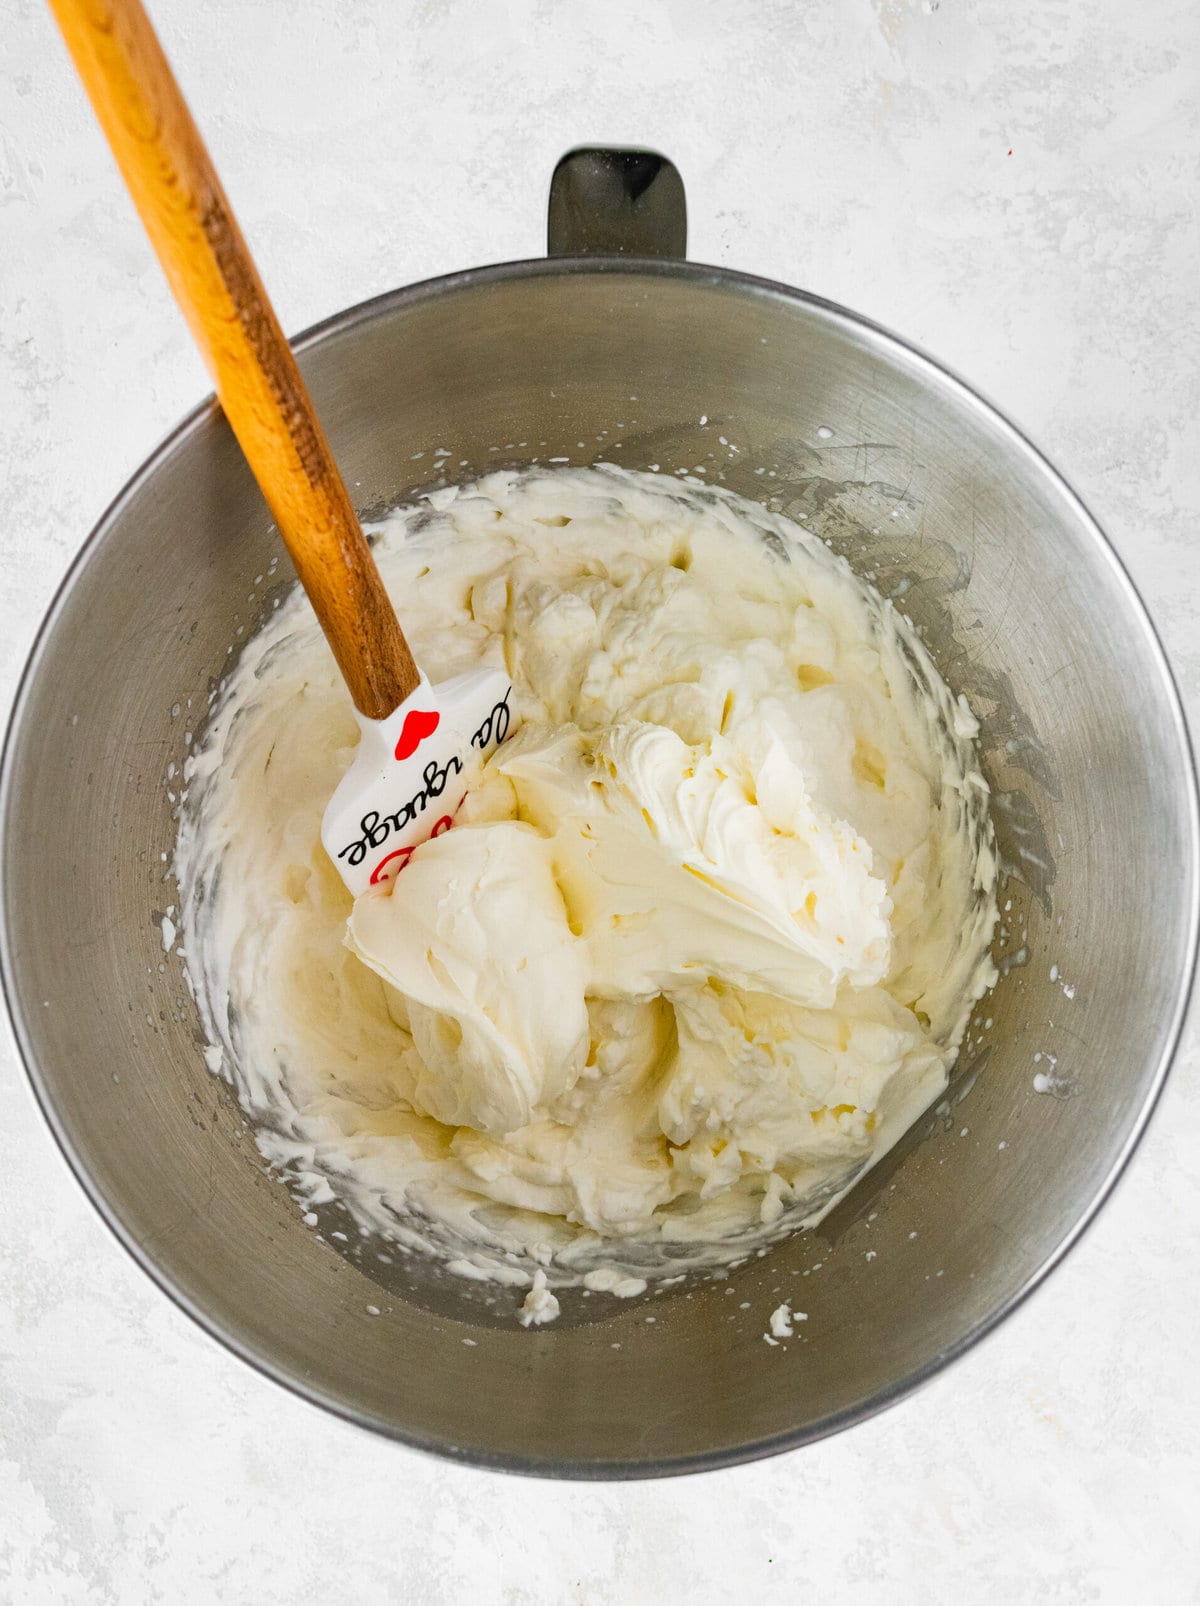 How to make Strawberry Tiramisu (no egg)- mix mascarpone and whipped cream until smooth.